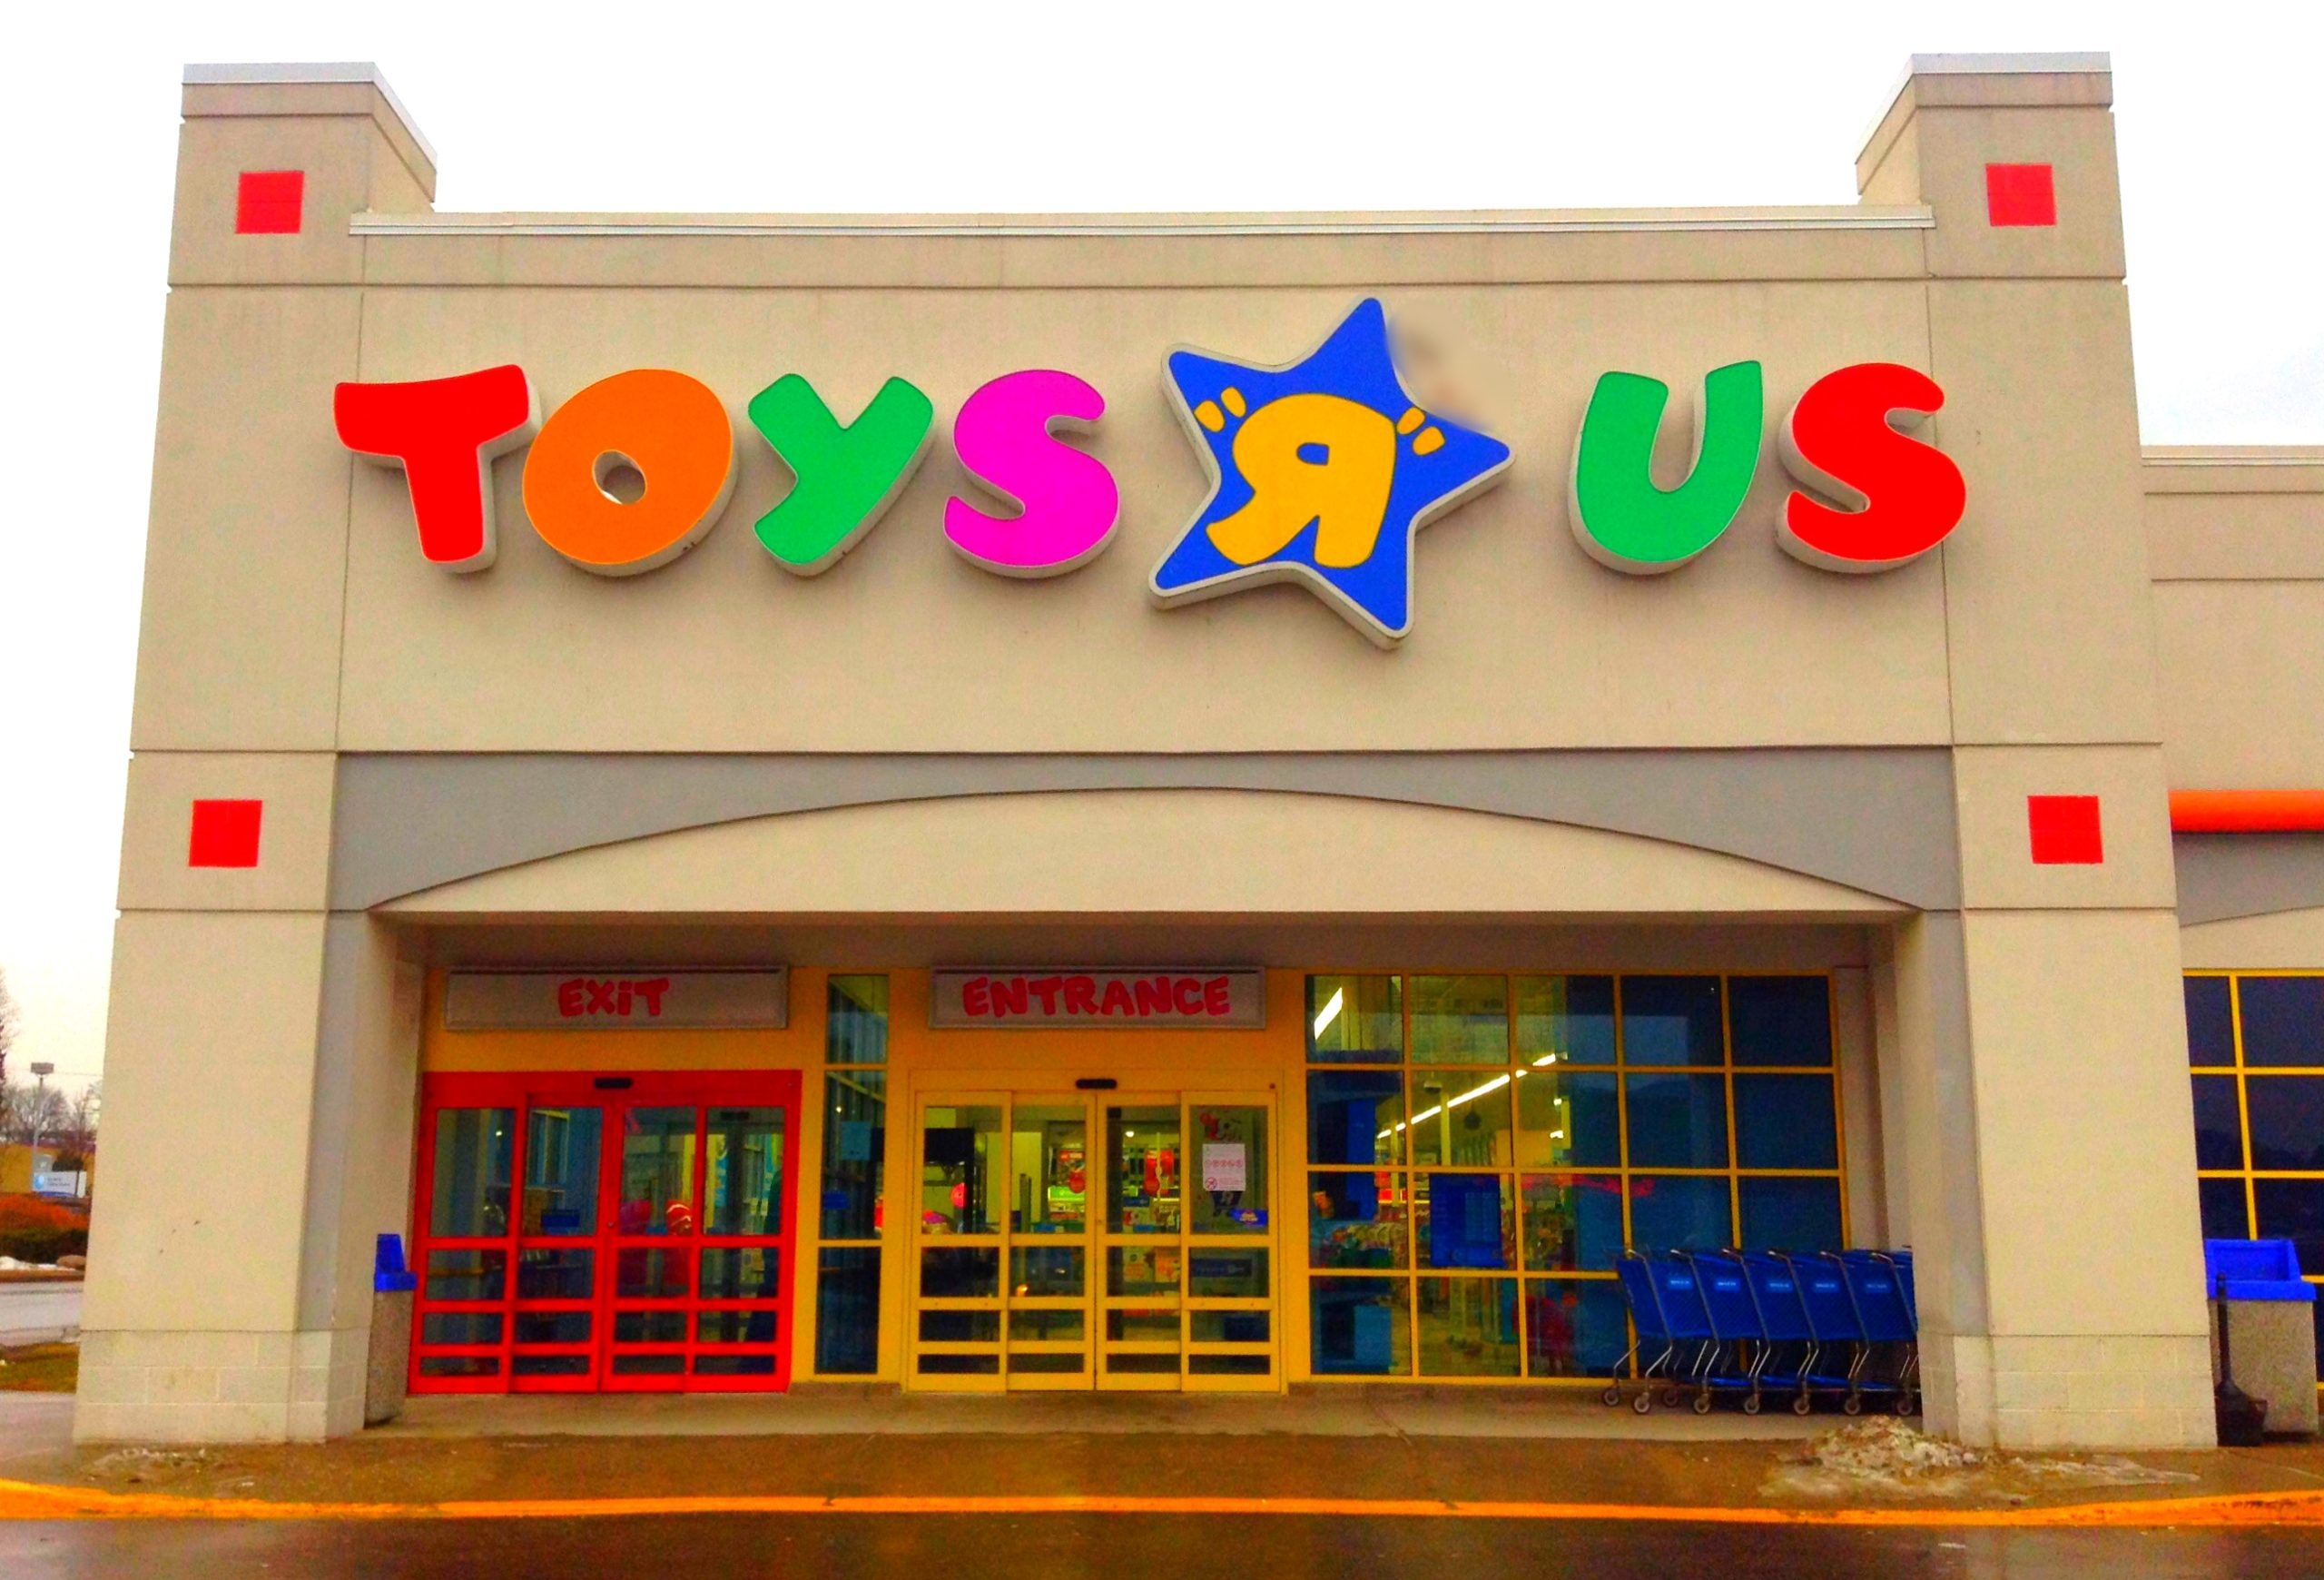 Facade of a Toys R Us store.